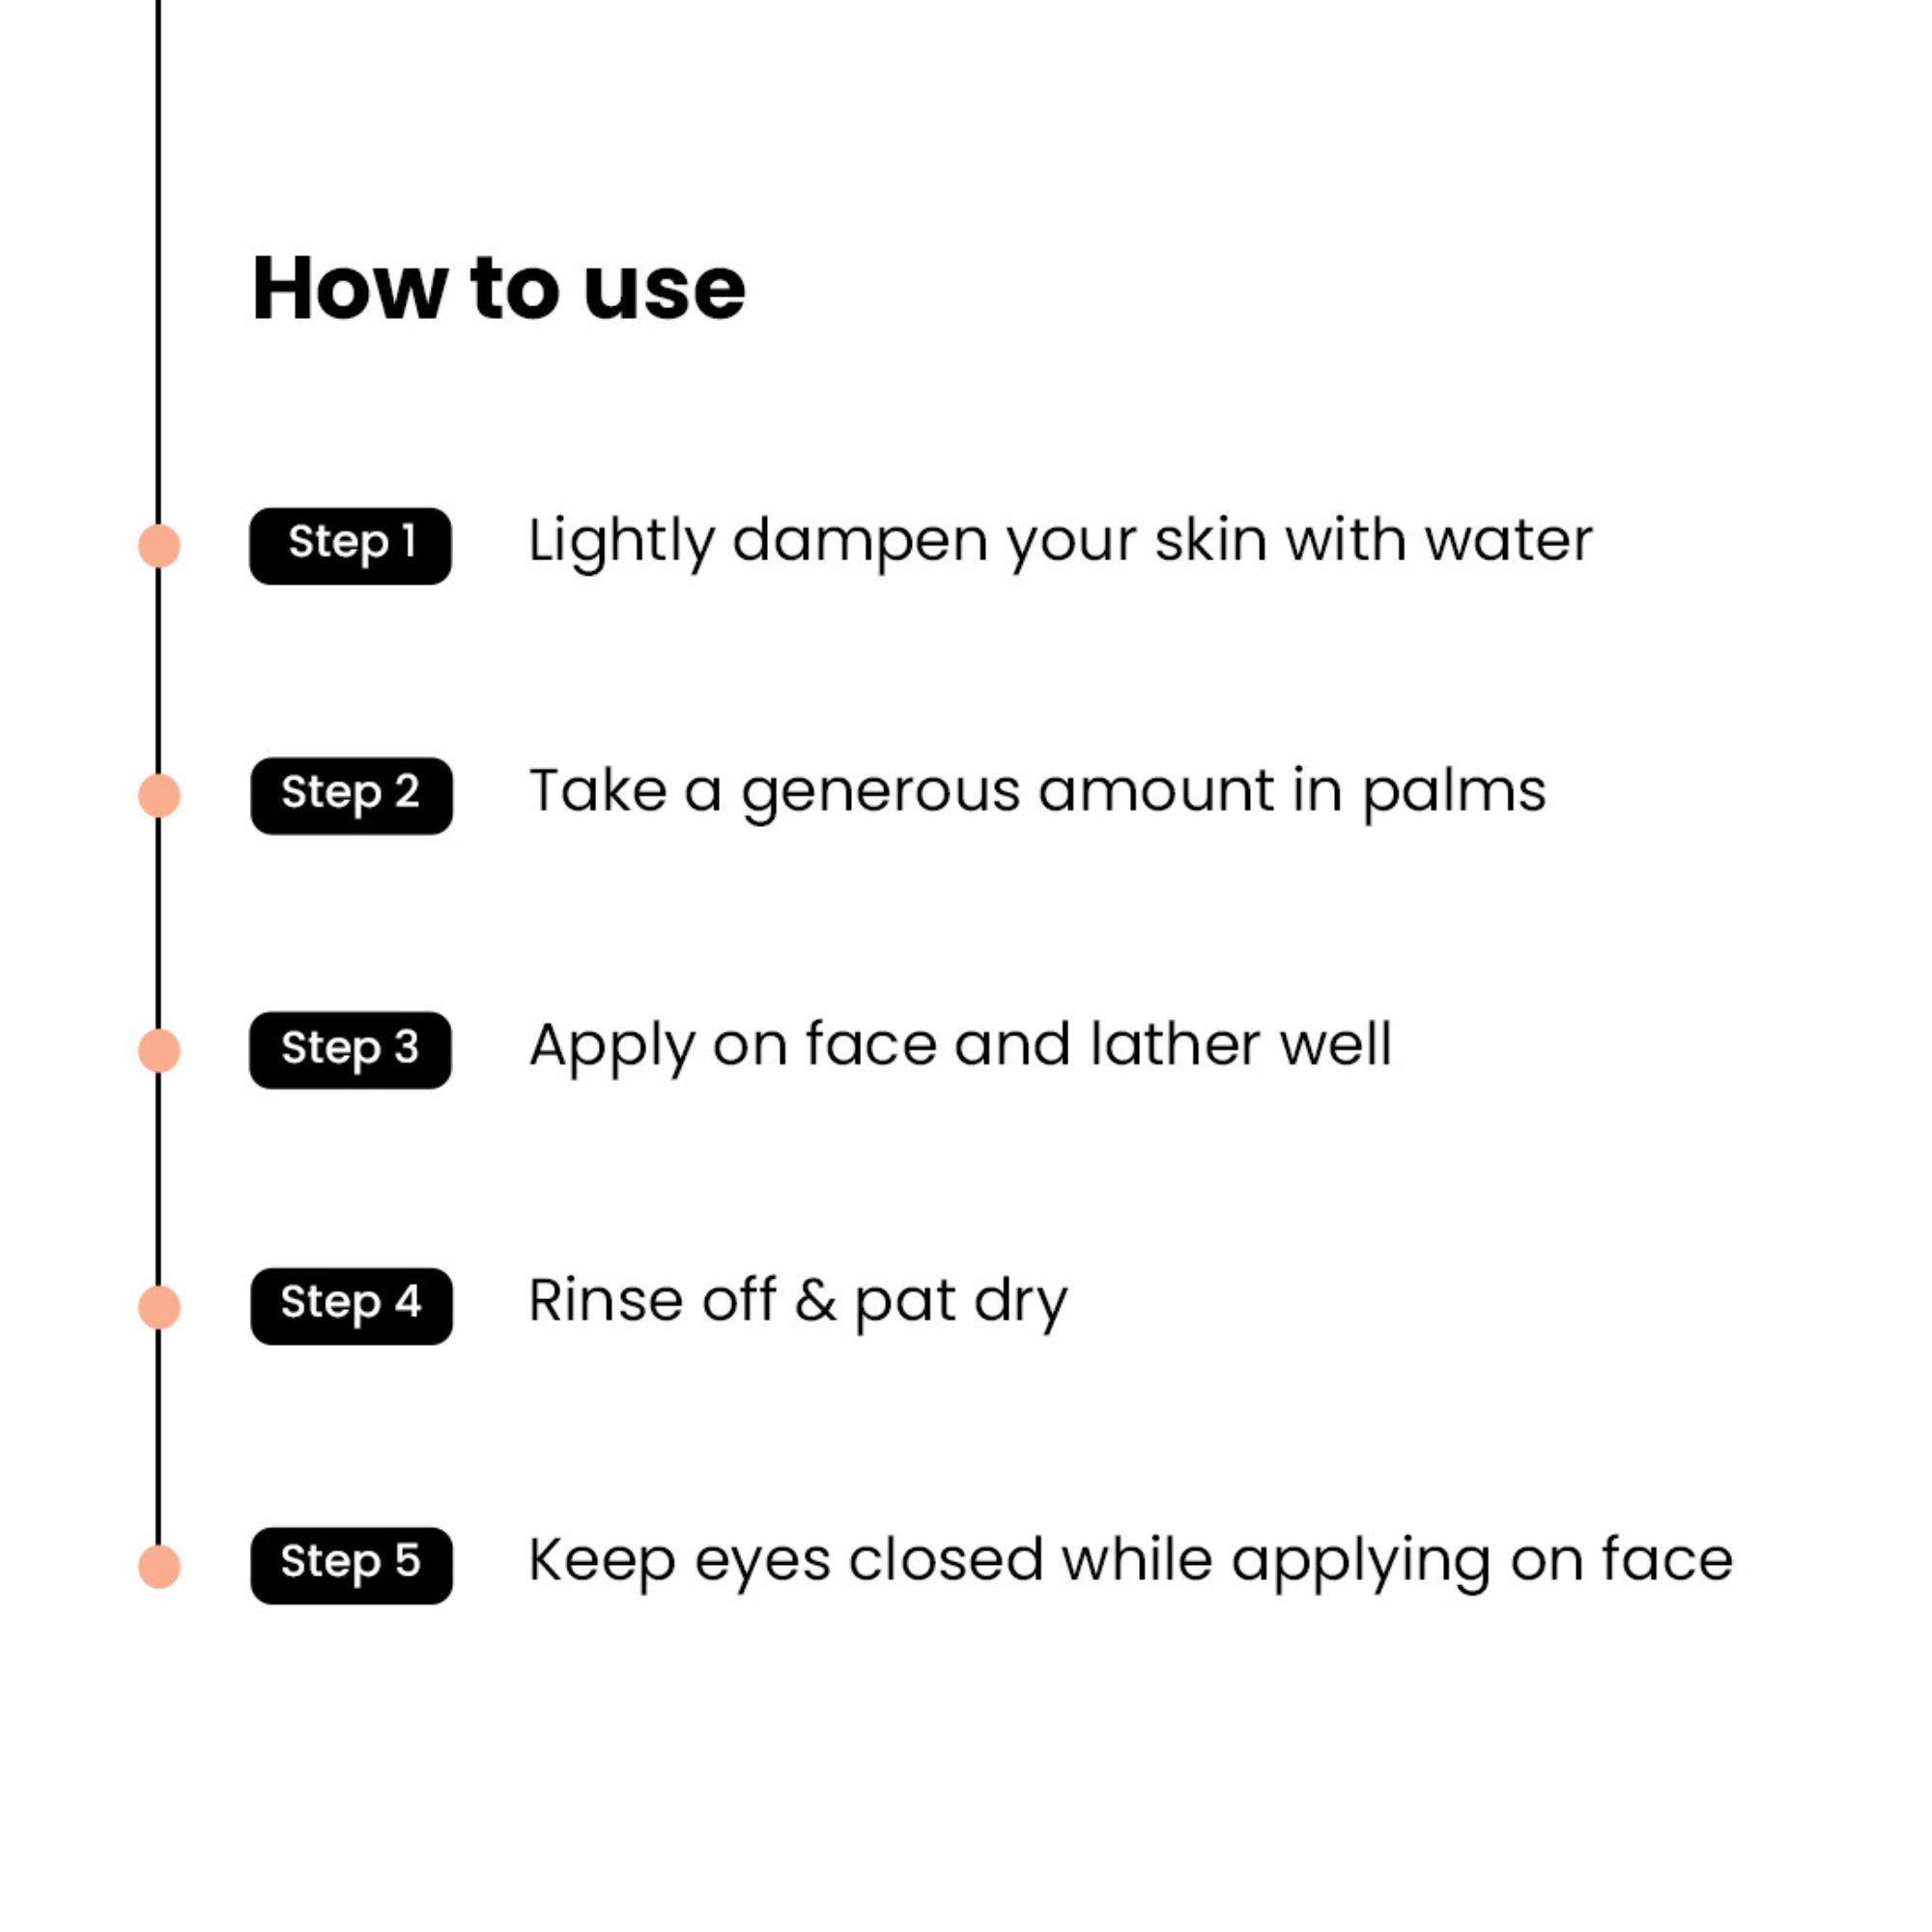 Anti-Pollution & De-Tan Refreshing Face Wash